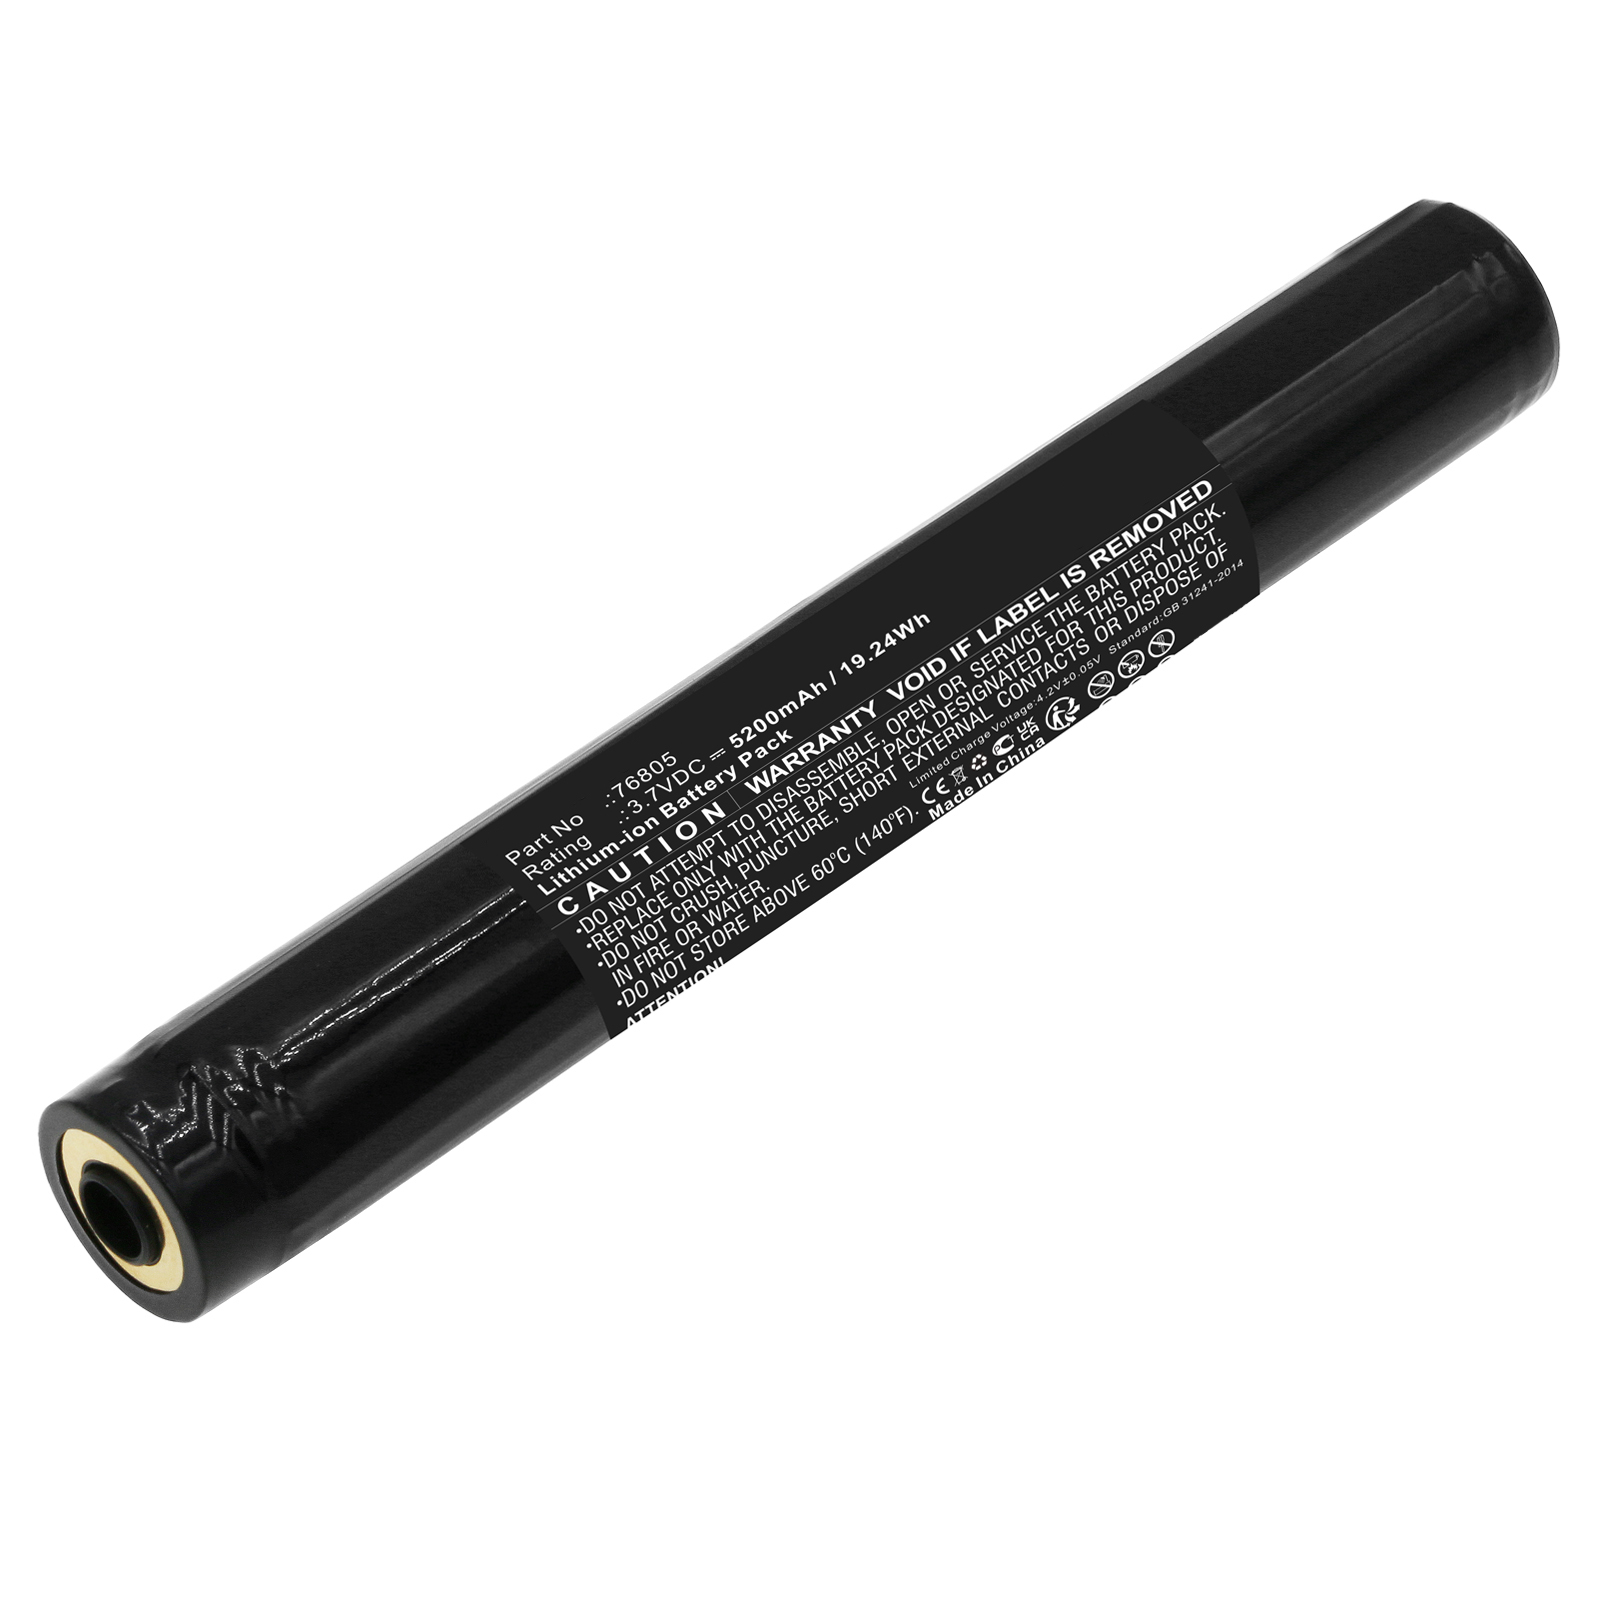 Synergy Digital Flashlight Battery Compatible with Streamlight 76805 Flashlight Battery (Li-ion, 3.7V, 5200mAh)